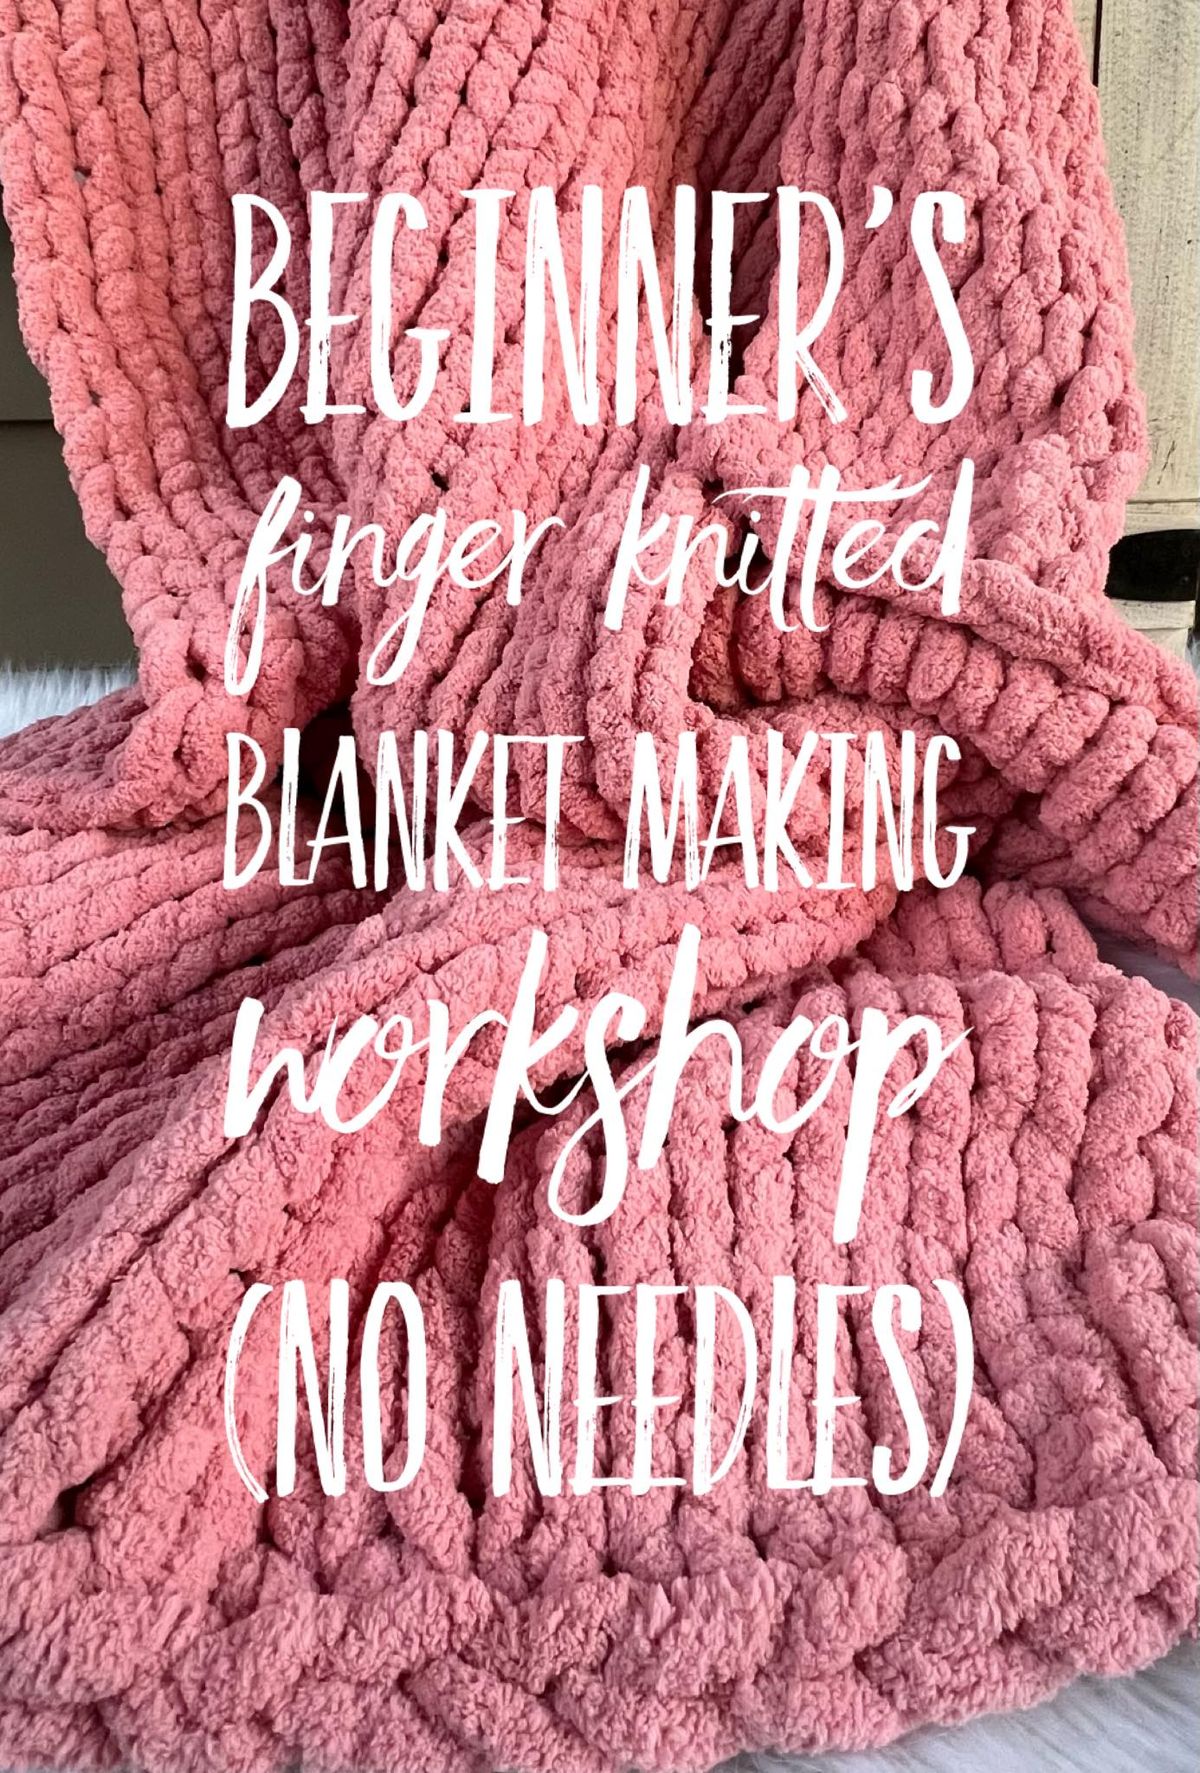 Beginner\u2019s Chunky Yarn Finger Knitted Blanket Workshop 06\/22 11:30am